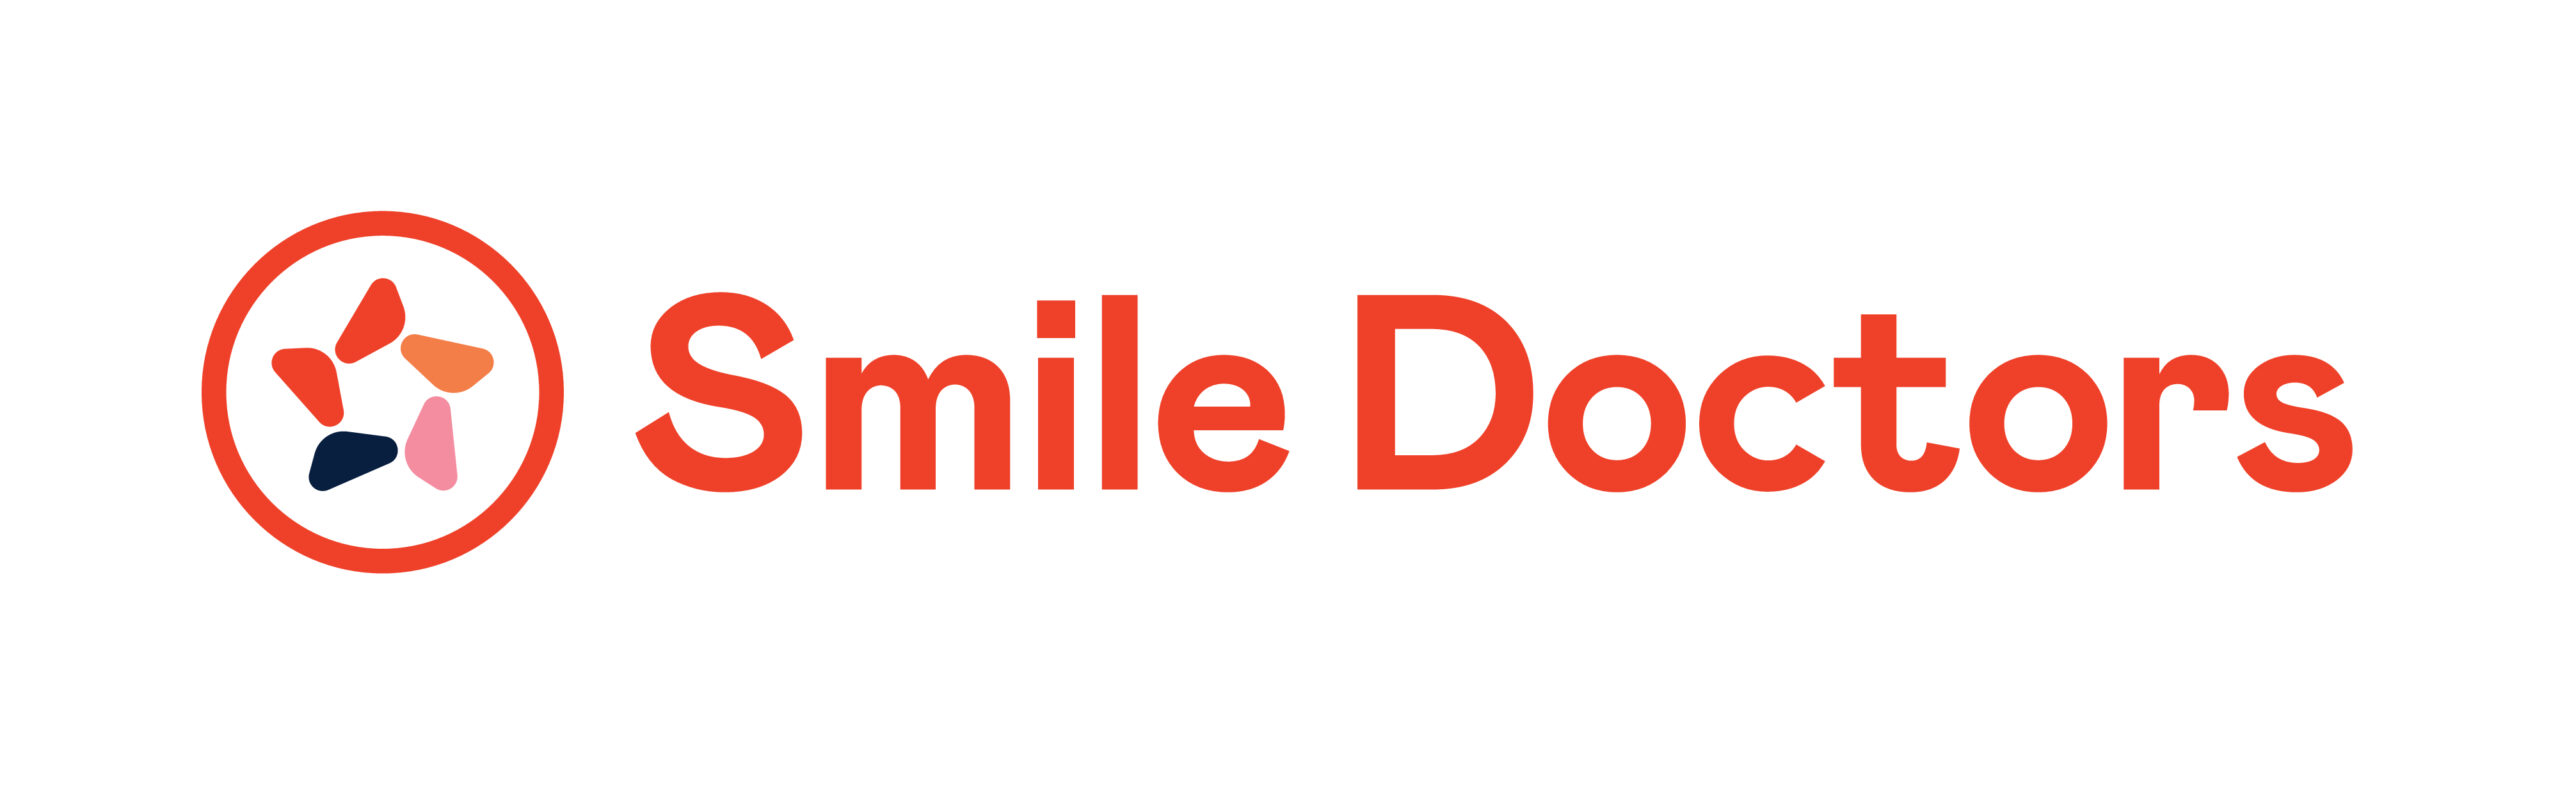 SMILE DOCTORS Logo_Vector_Color_PMS-4000x1226-8b79653